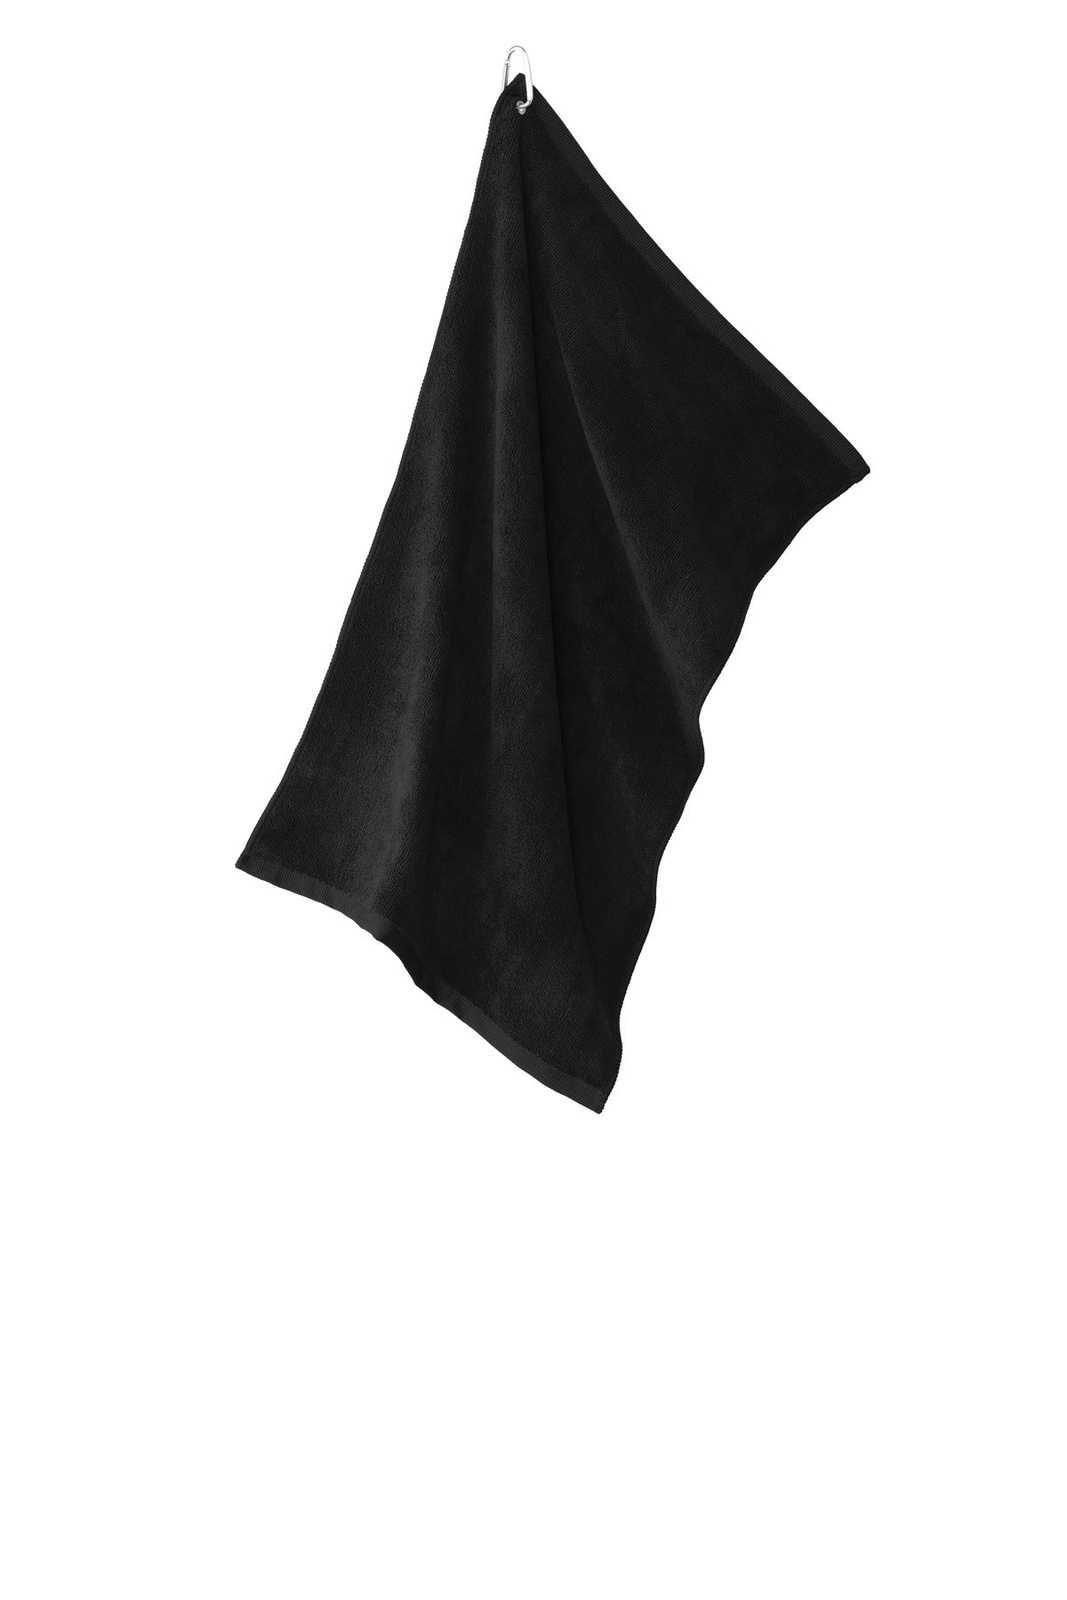 Port Authority TW530 Grommeted Microfiber Golf Towel - Black - HIT a Double - 1